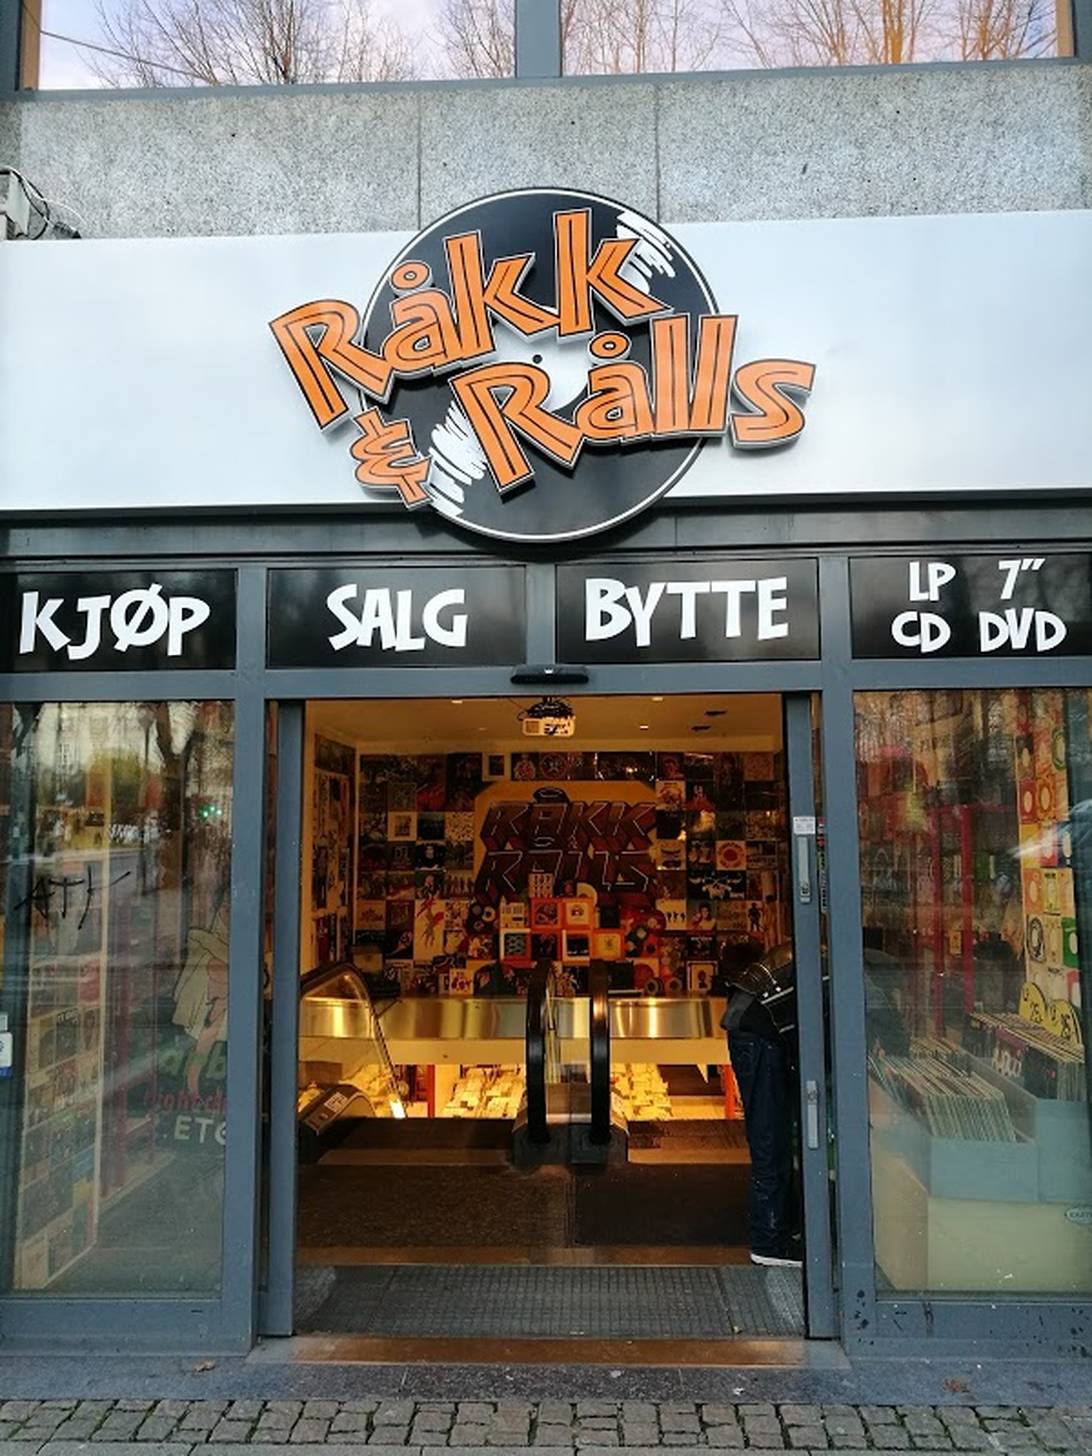 Råkk and Rålls Second-Hand Shop